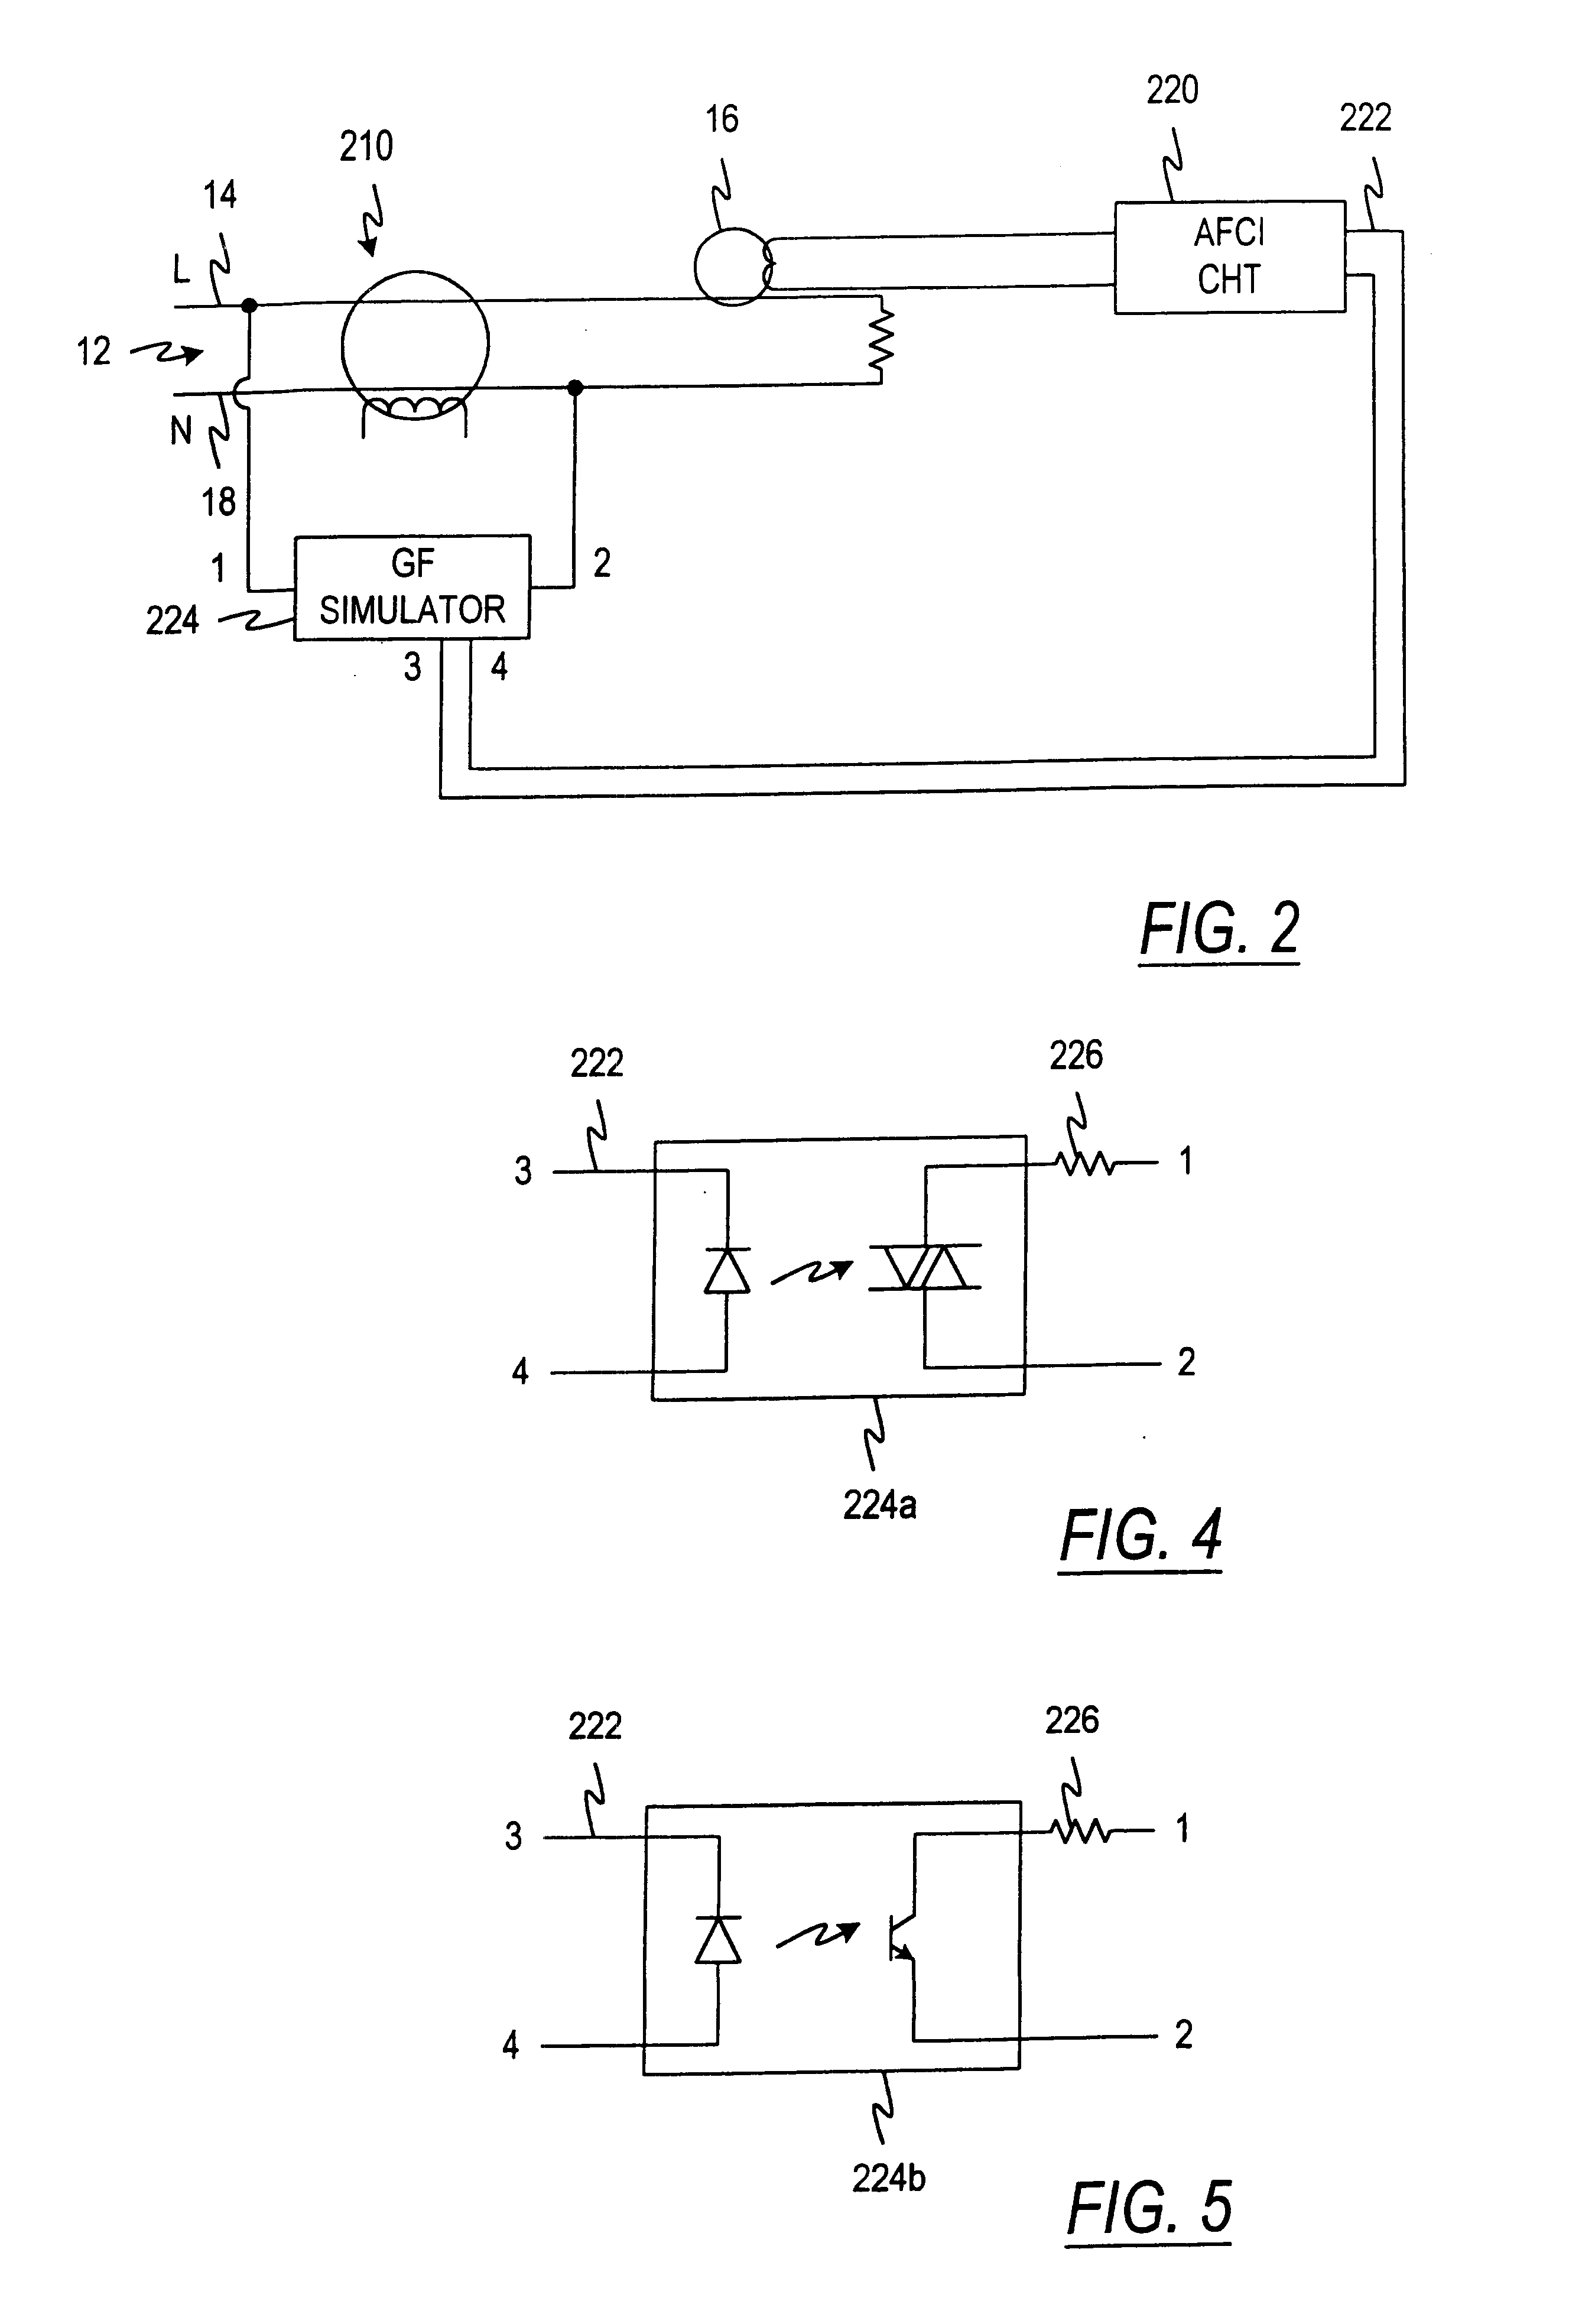 Arc fault circuit interrupter